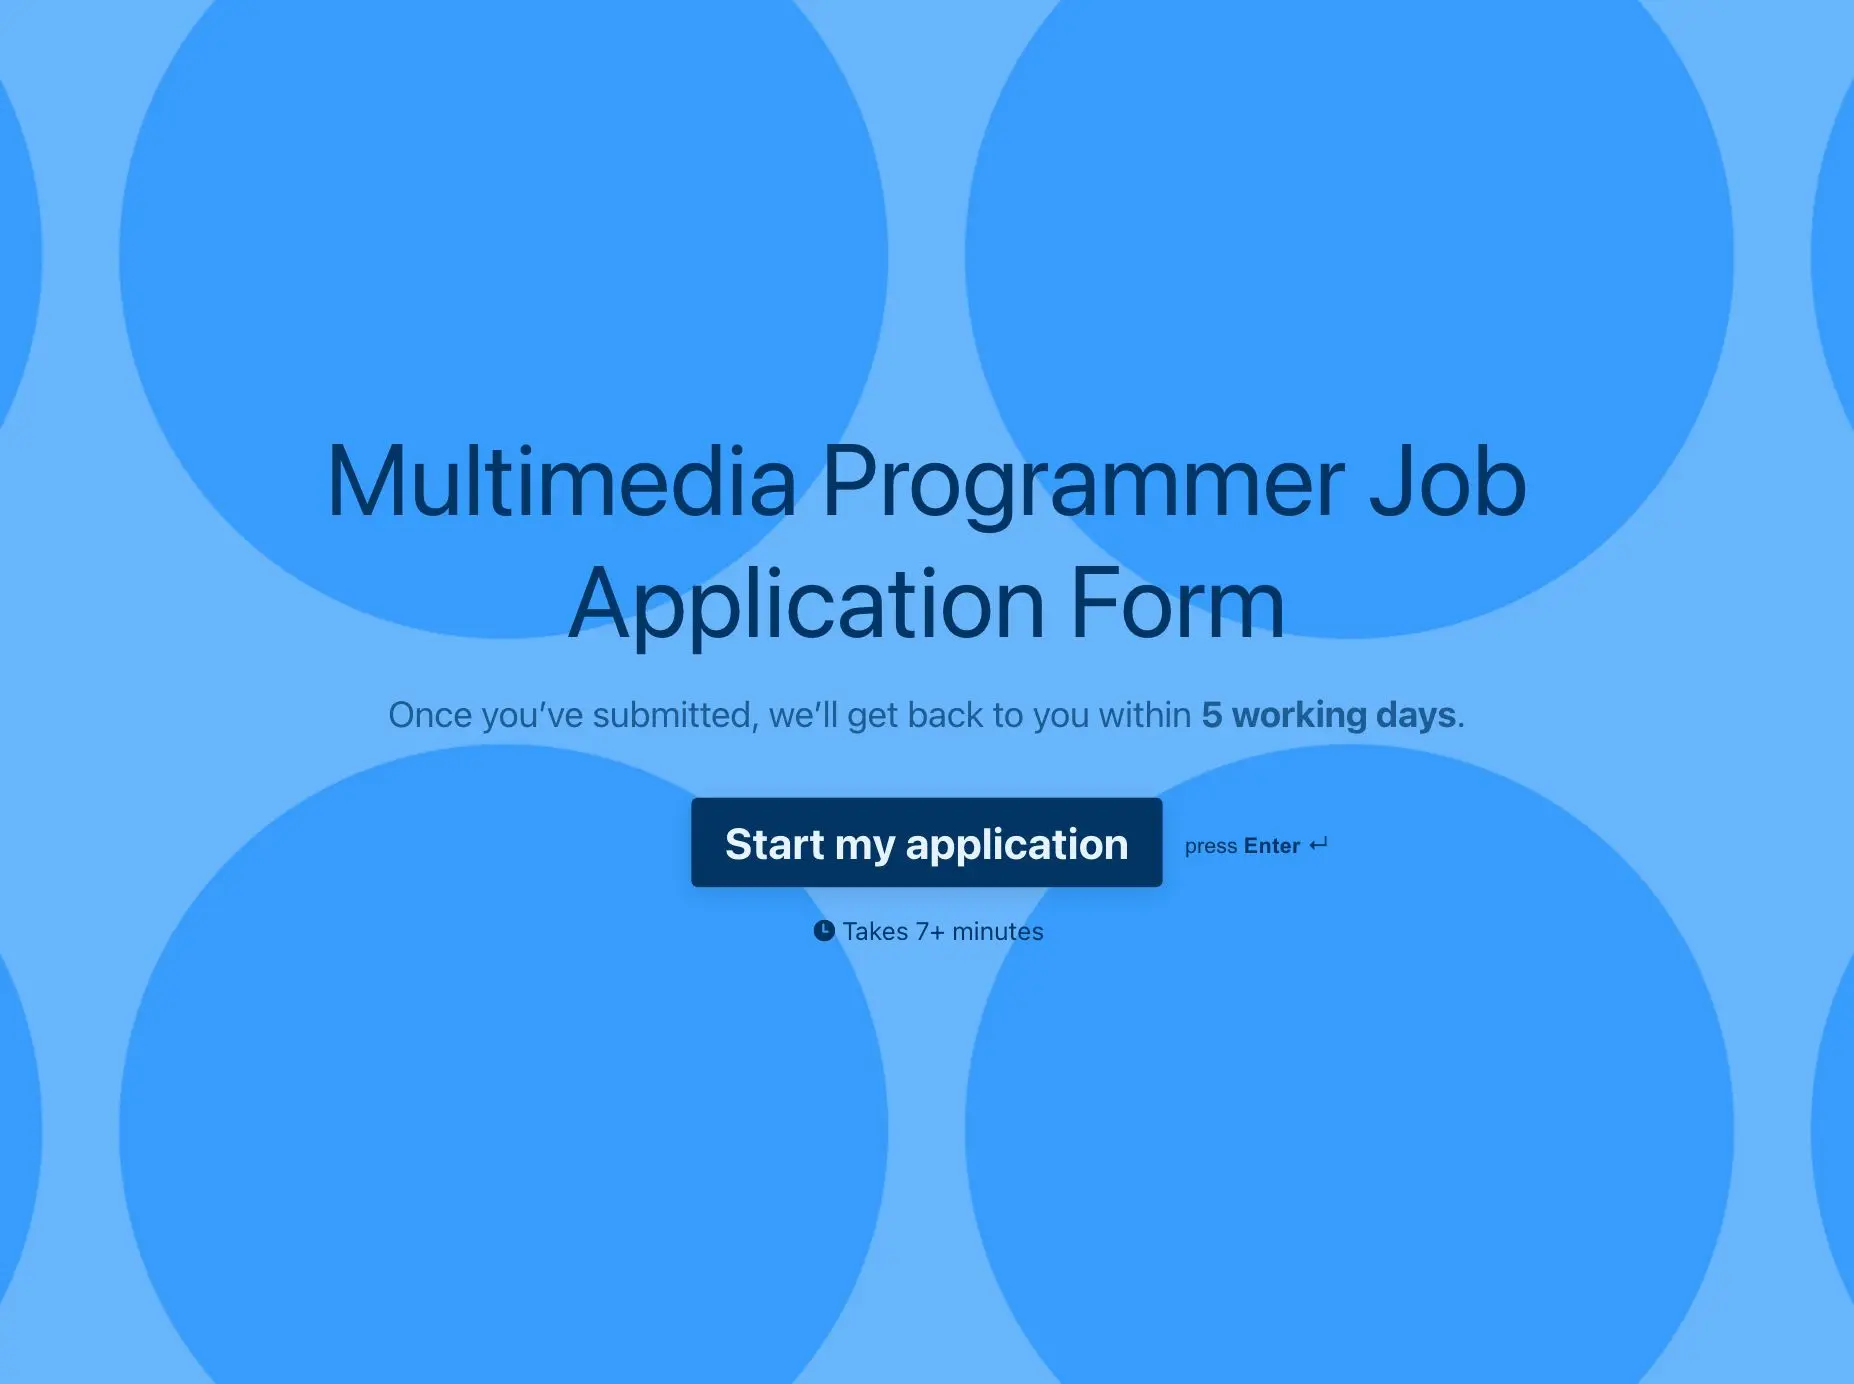 Multimedia Programmer Job Application Form Template Hero